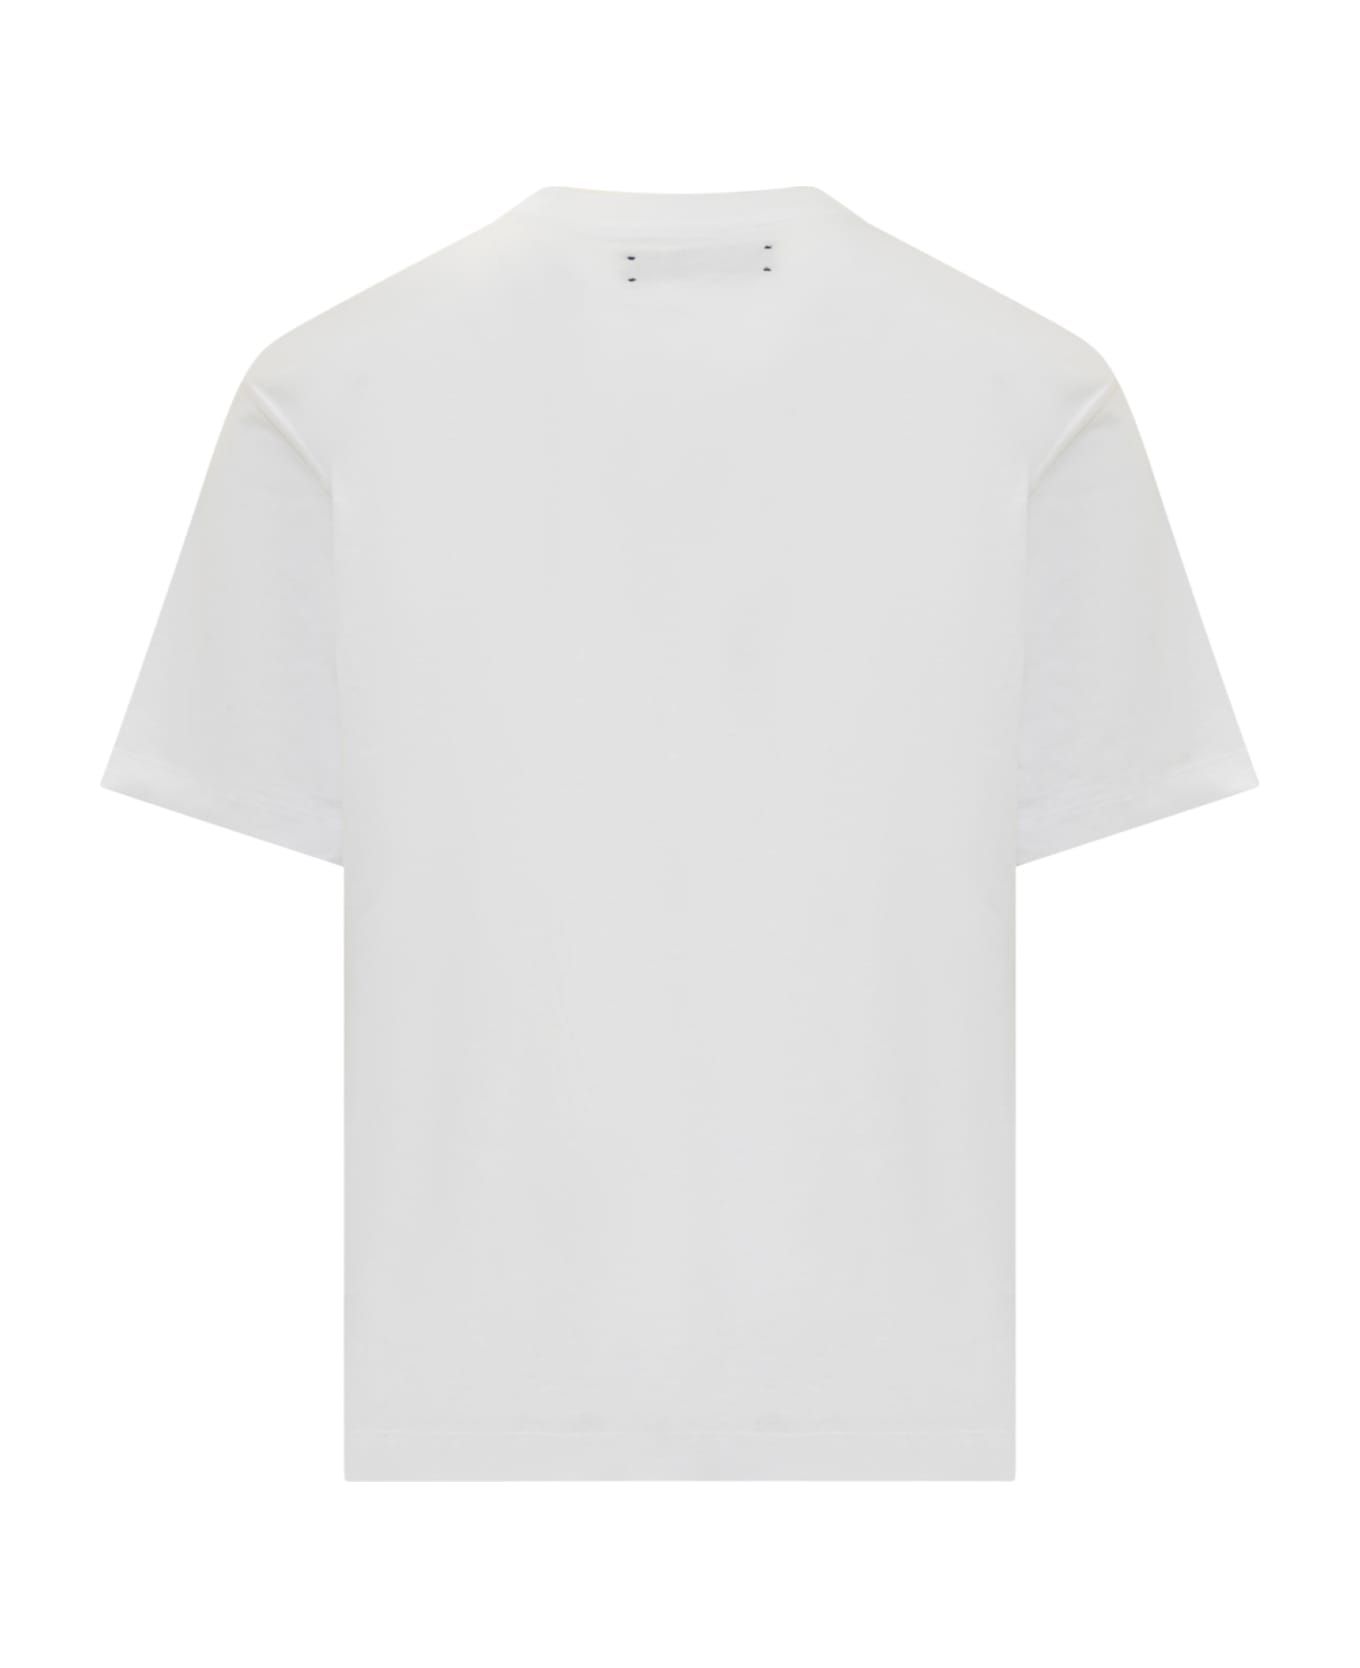 AMIRI Ma Bar Logo T-shirt - WHITE シャツ